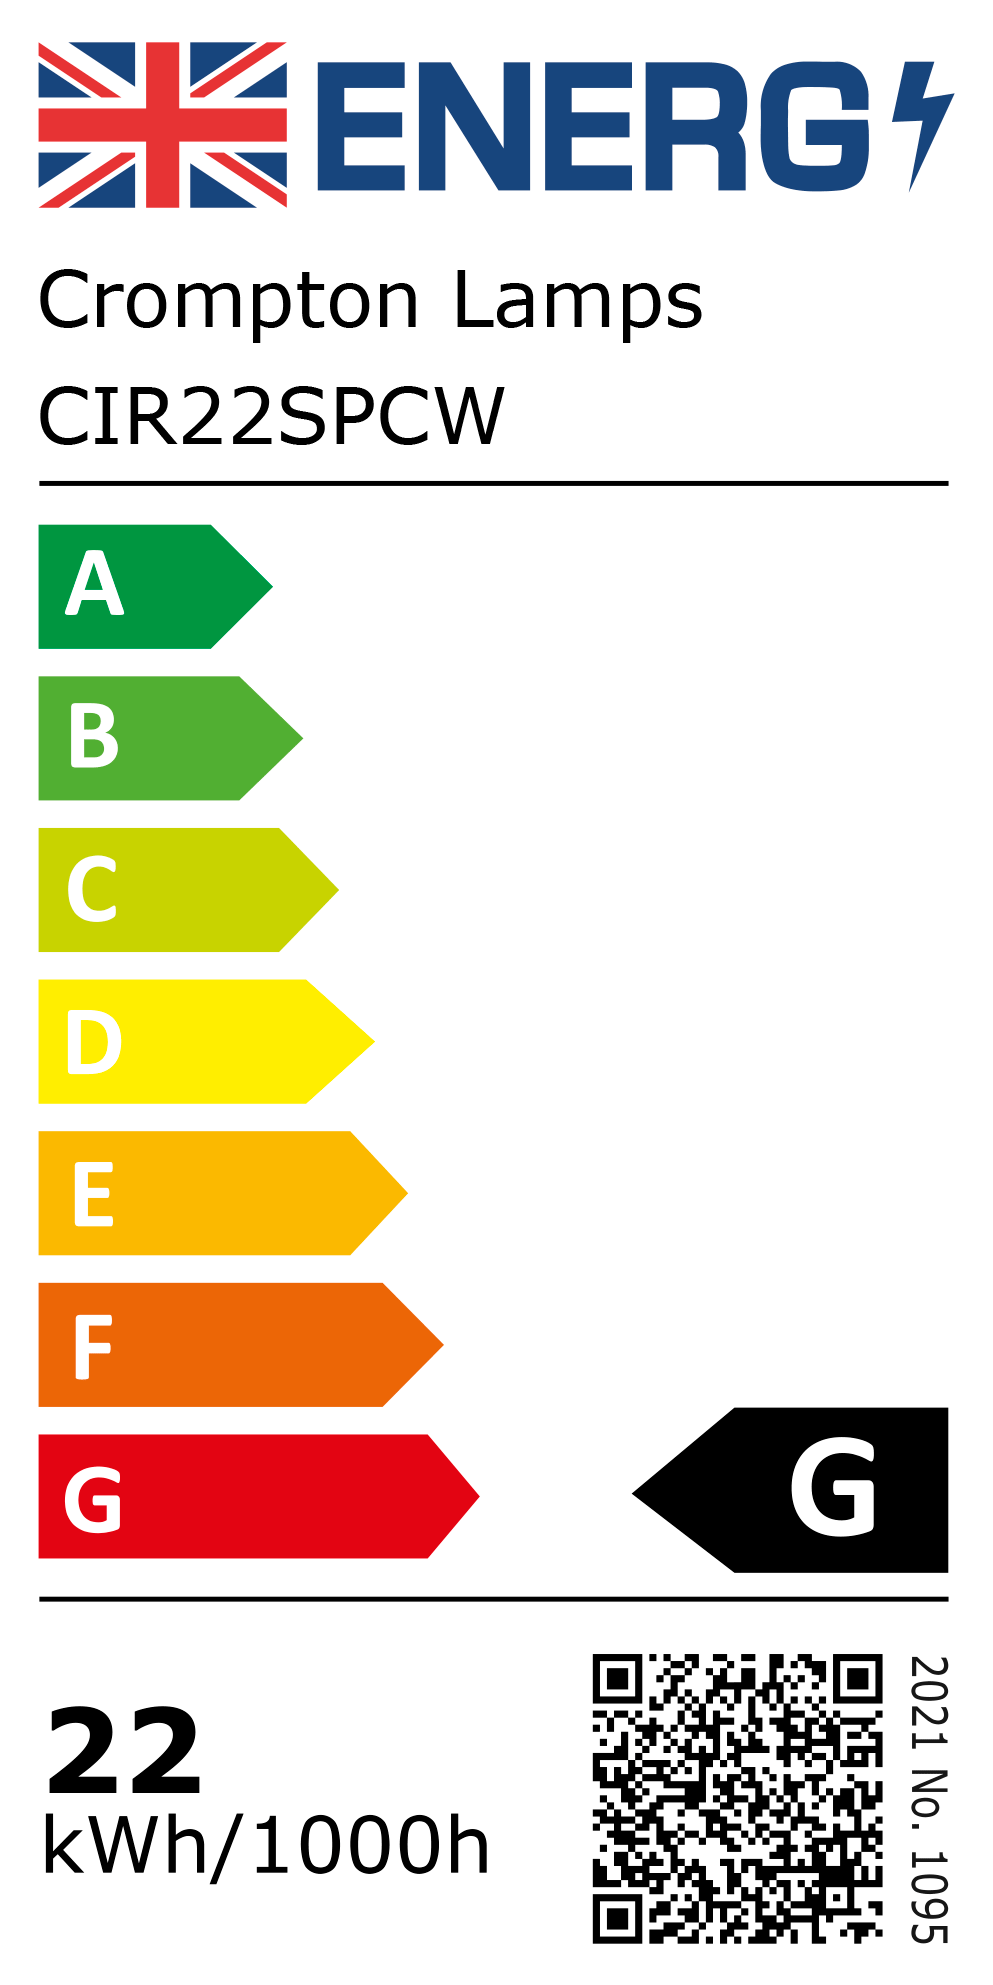 New 2021 Energy Rating Label: Stock Code CIR22SPCW